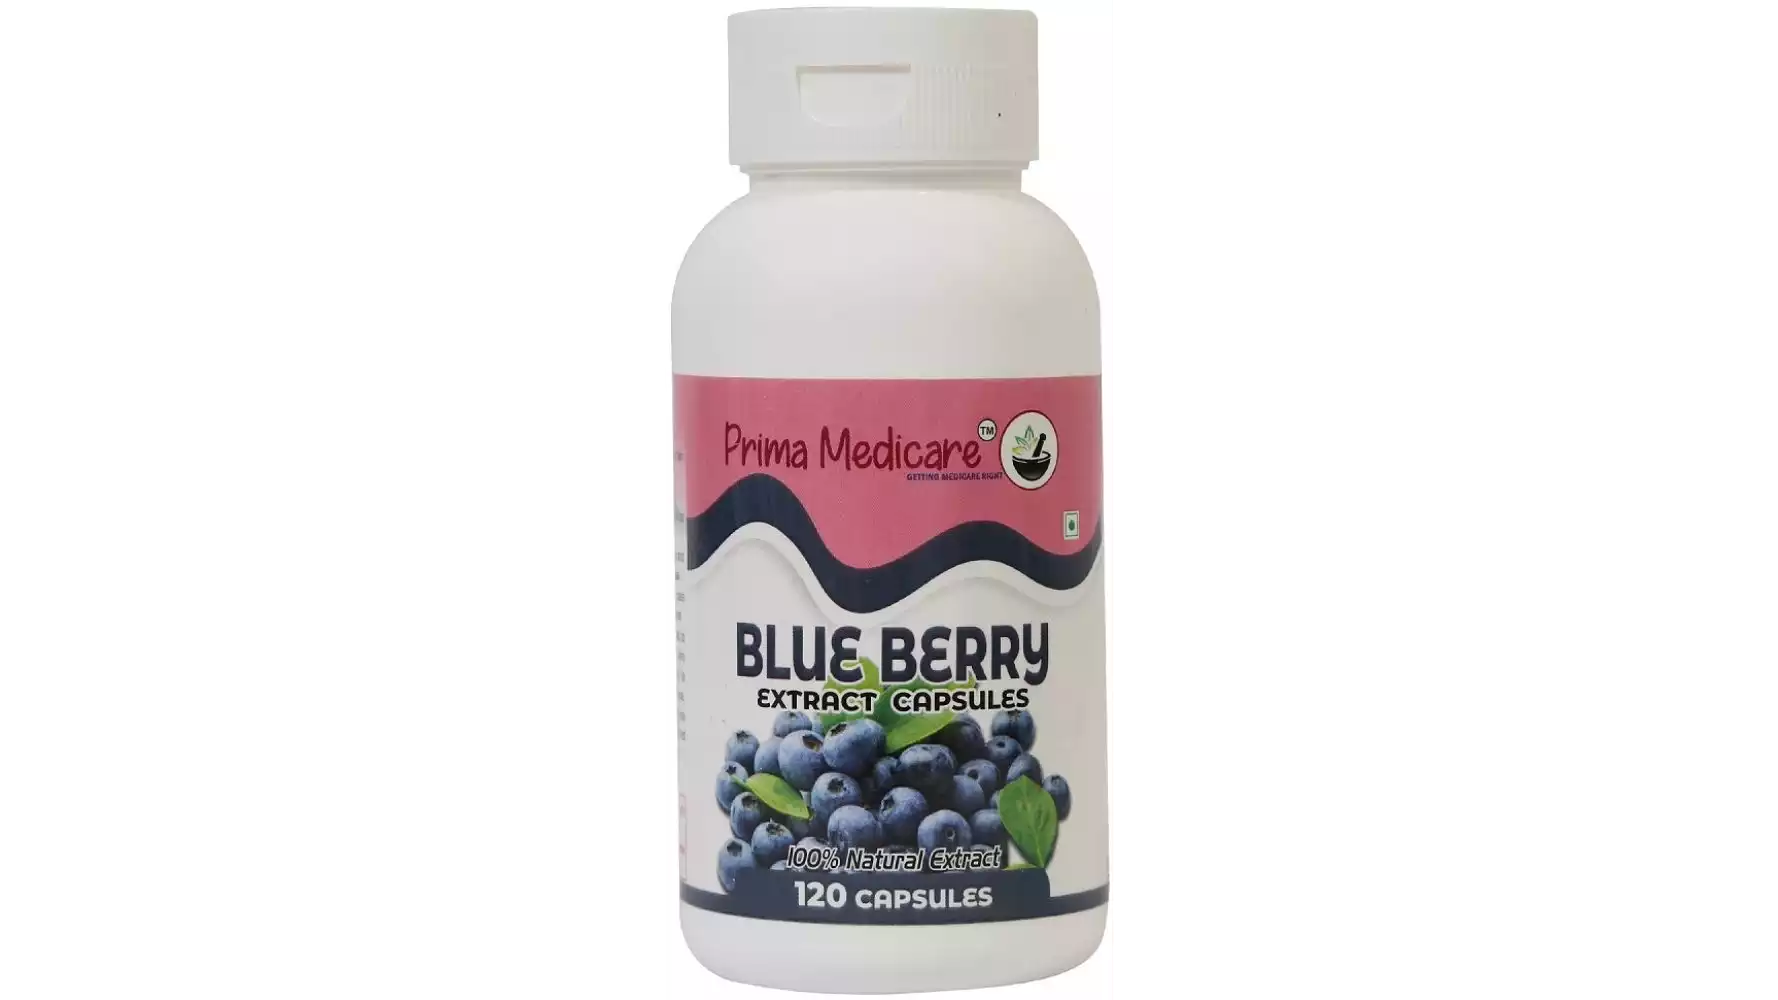 Prima Medicare Blueberry Extract Capsules (120caps)